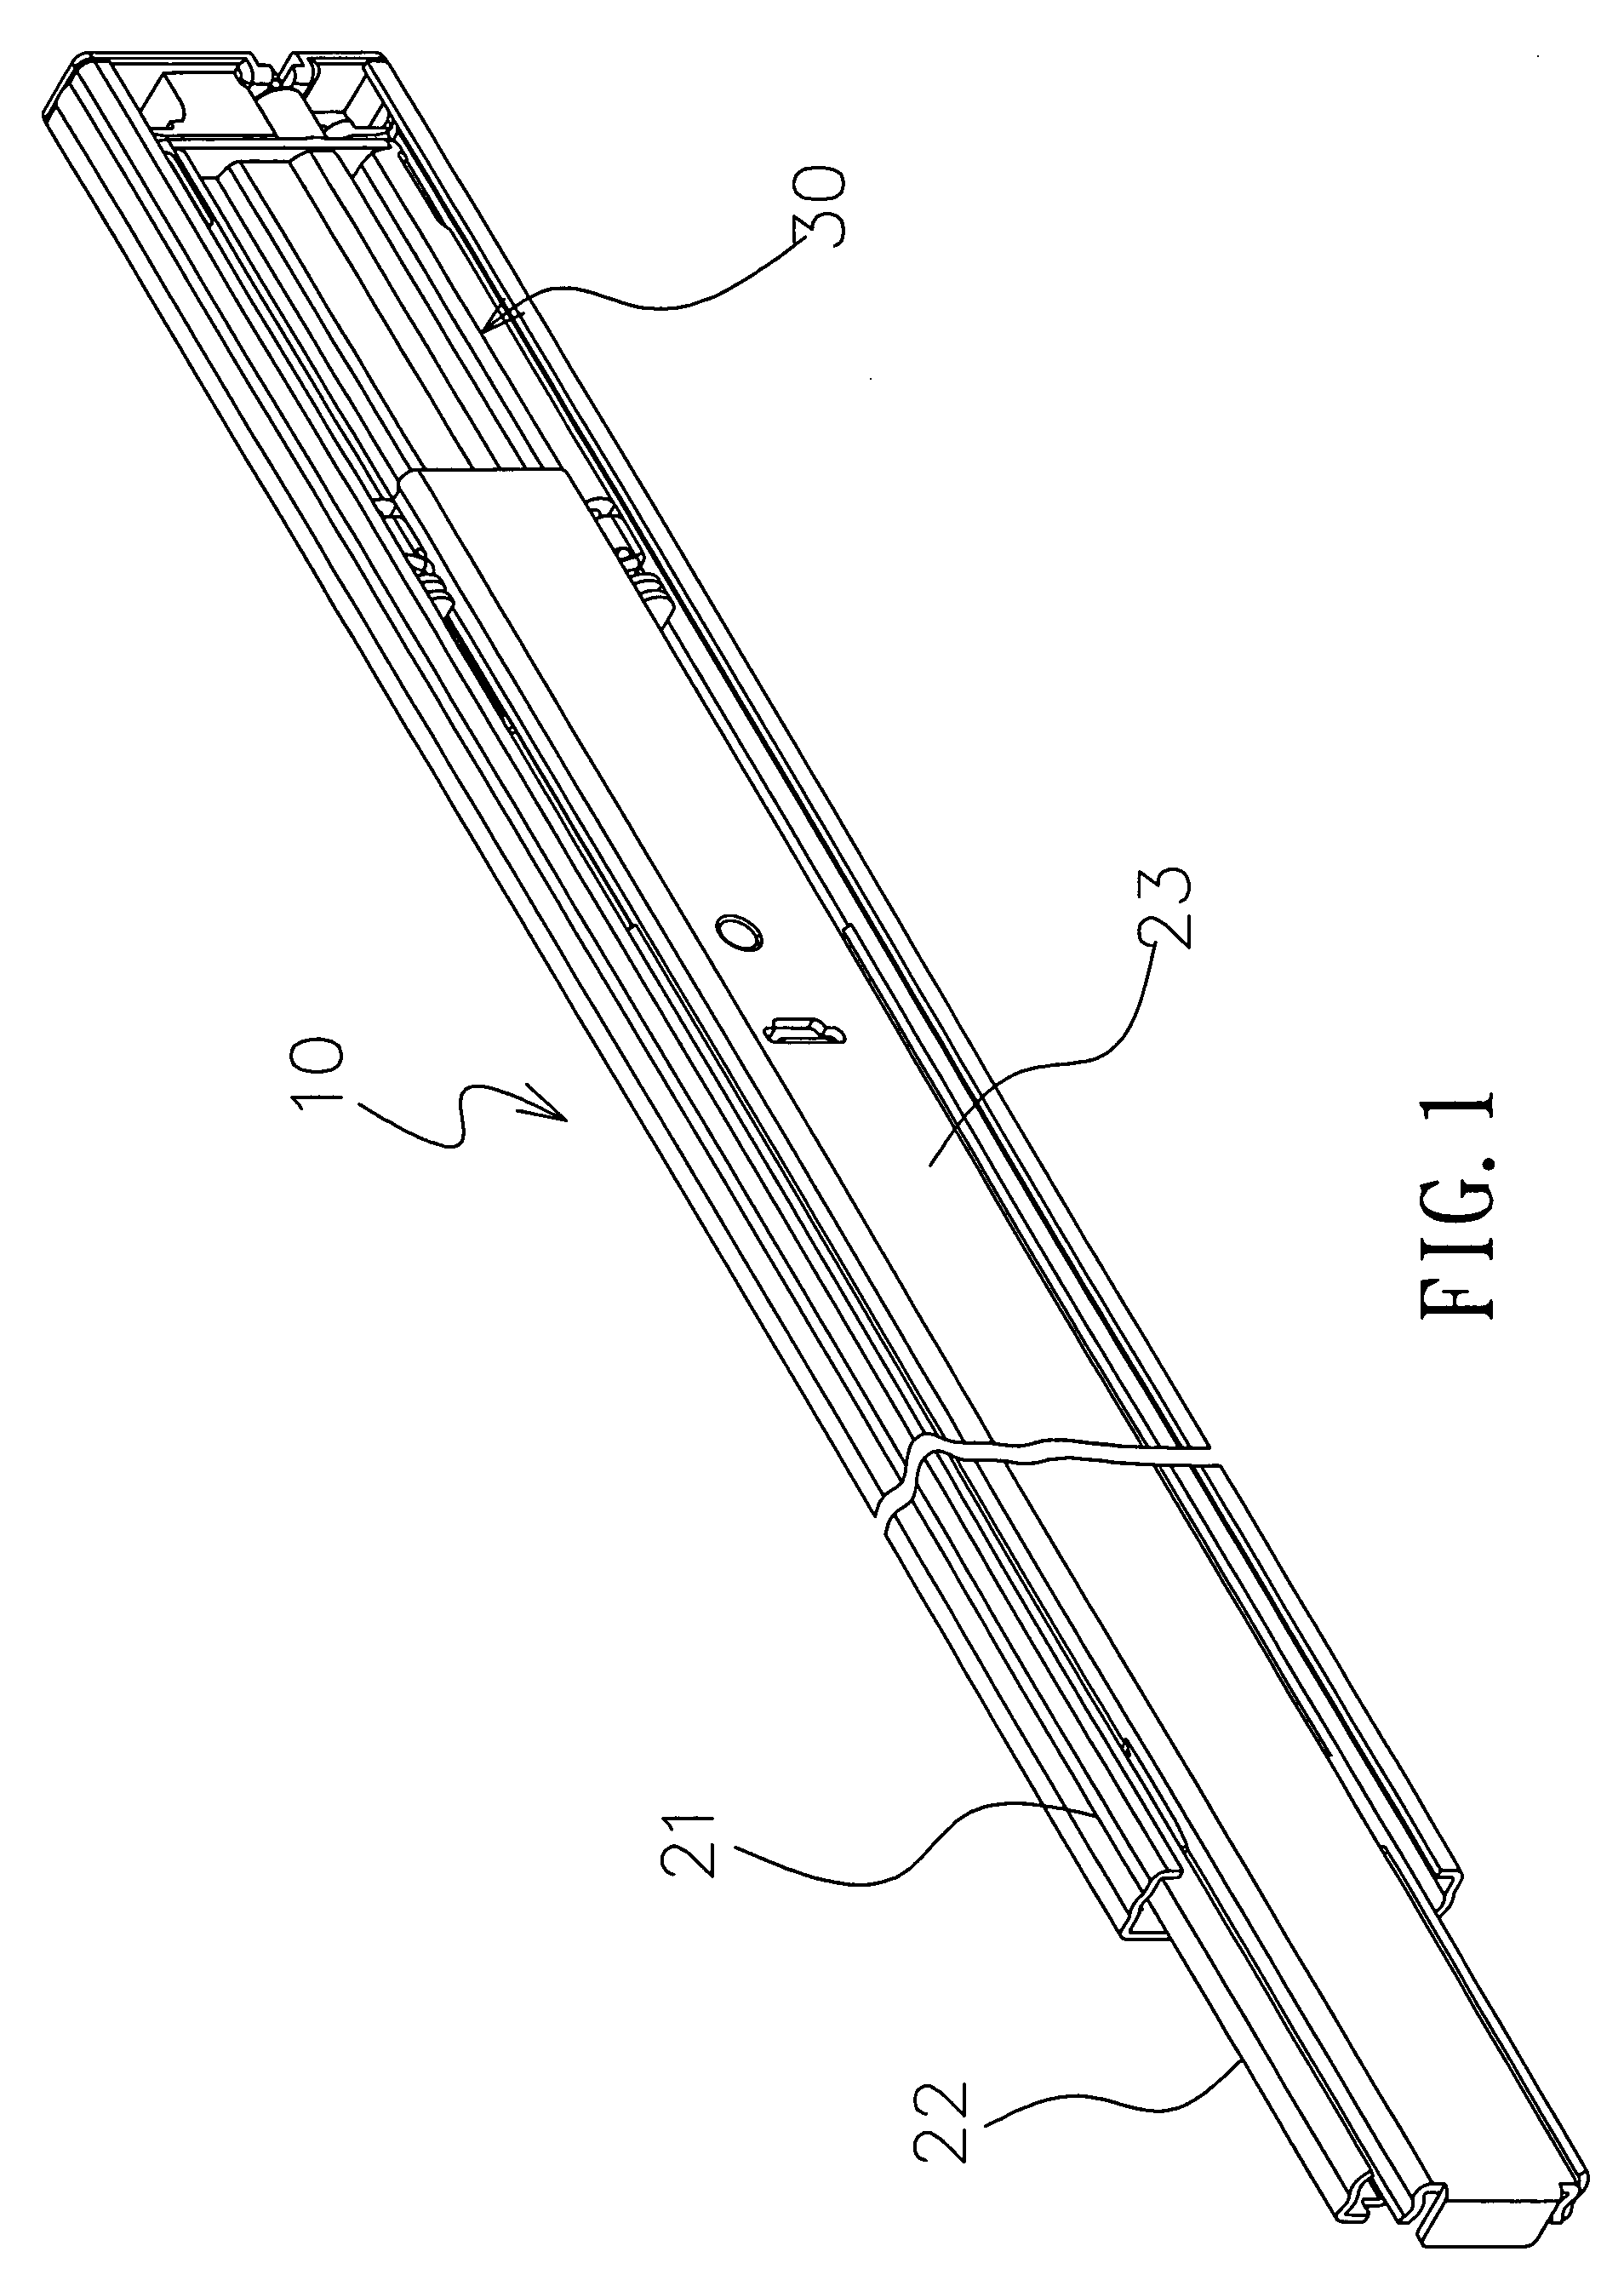 Automatic position restoring slide rail device